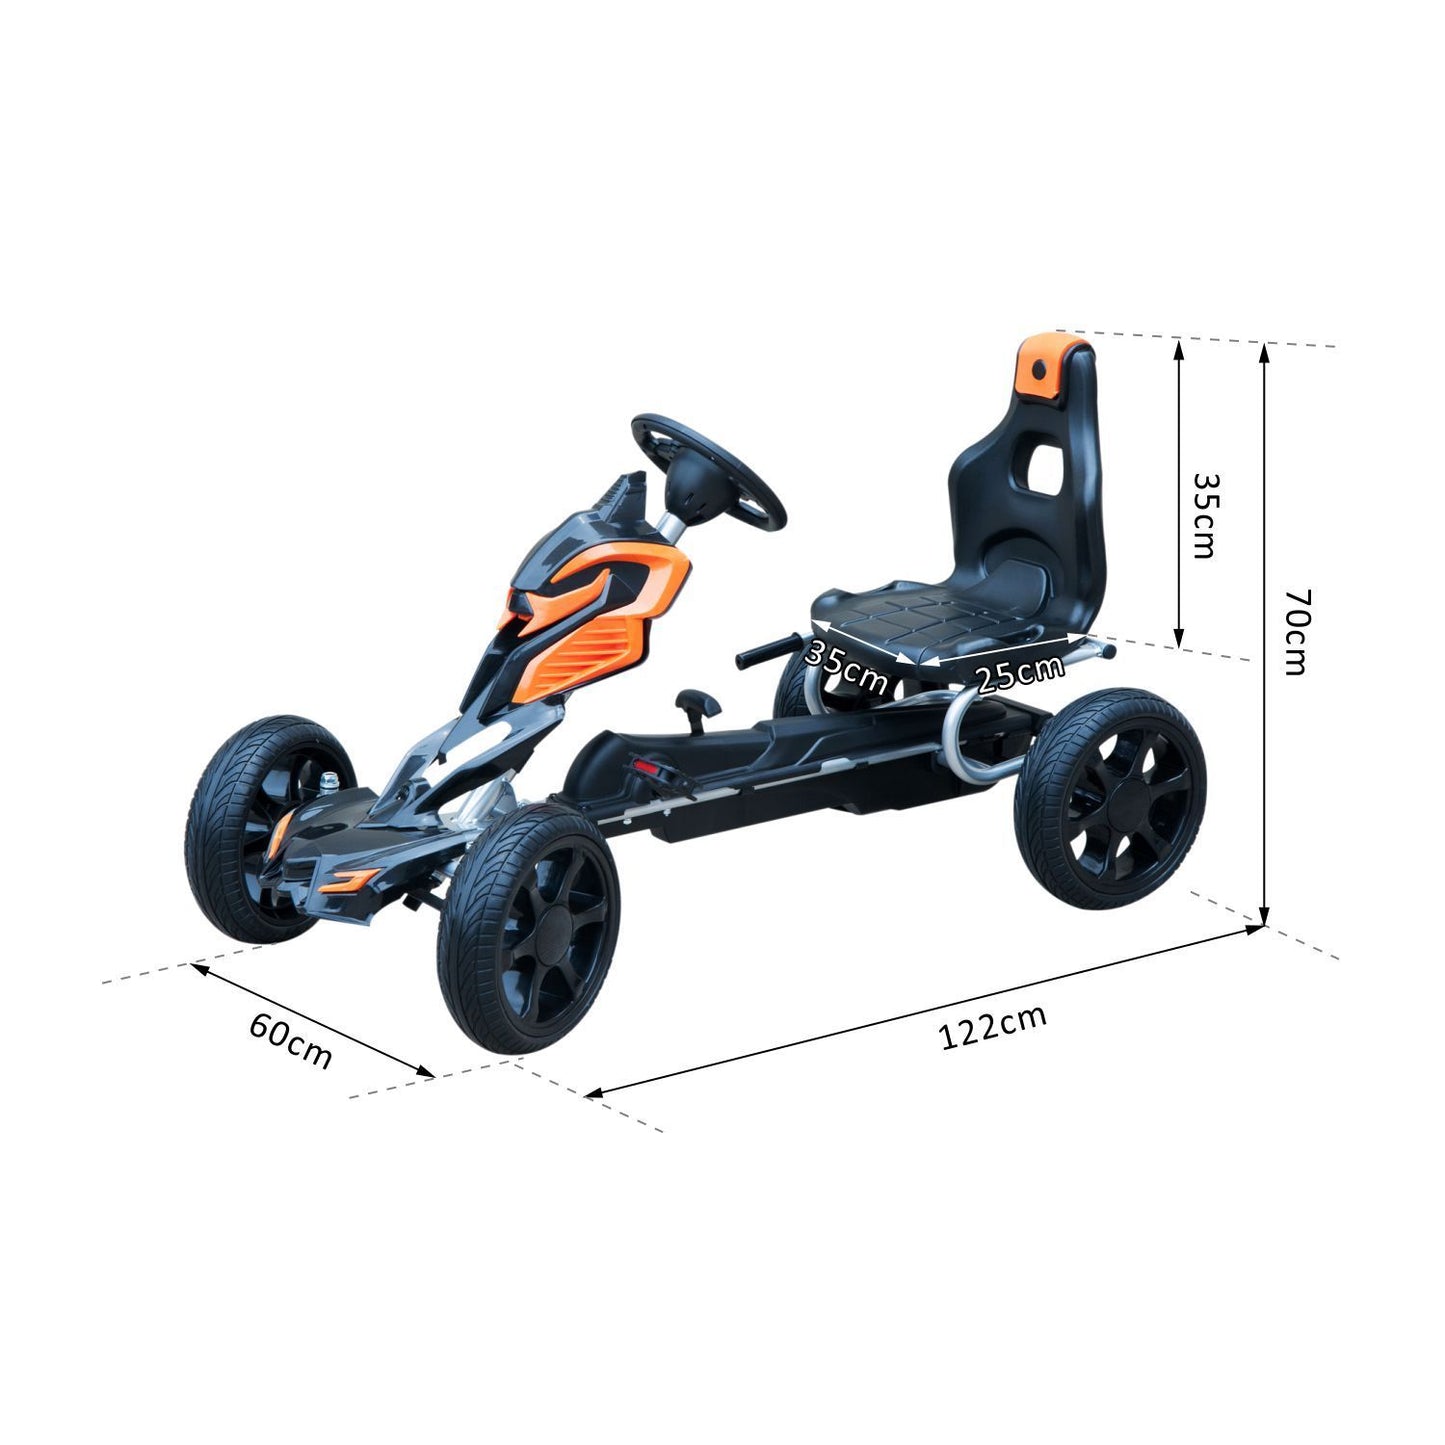 HOMCOM Kids Ride On Pedal Go Kart Indoor Outdoor Sports Toy Braking System-Orange/Black